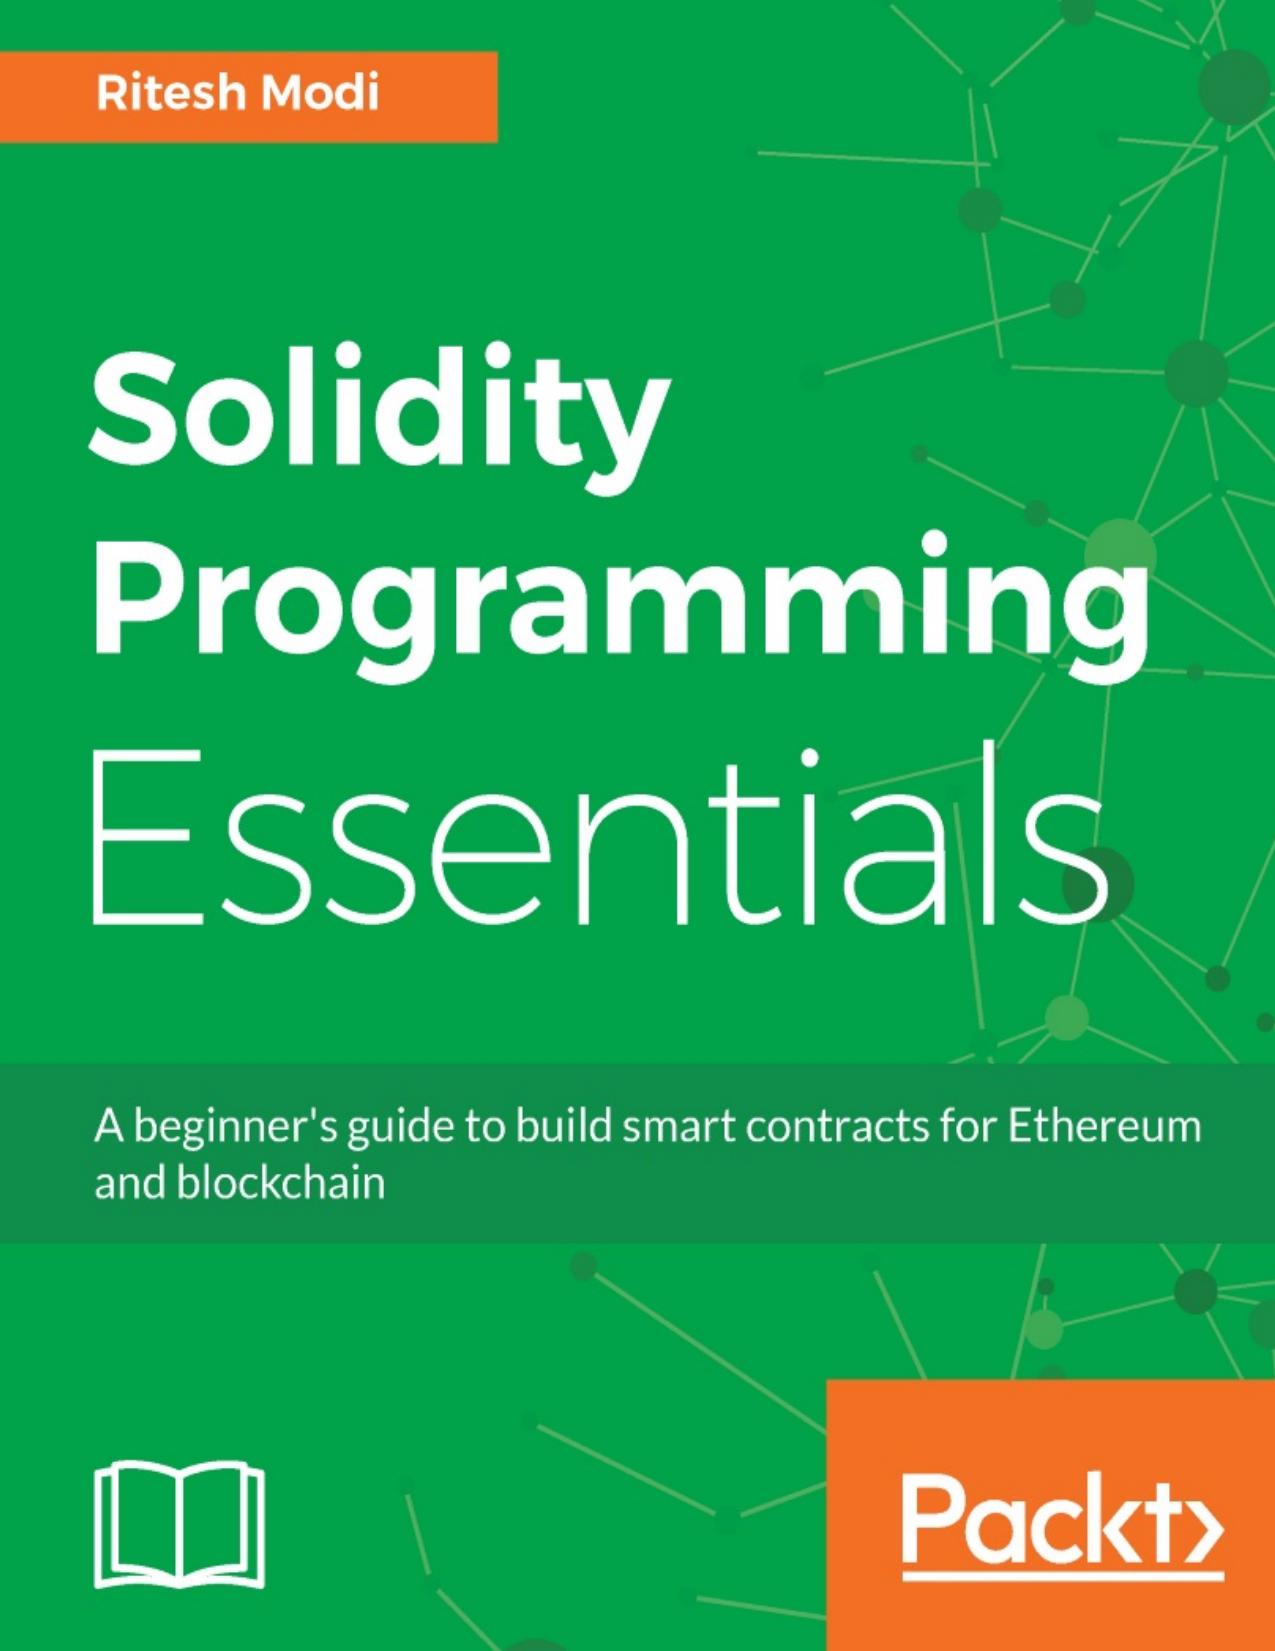 Solidity Programming Essentials by Ritesh Modi